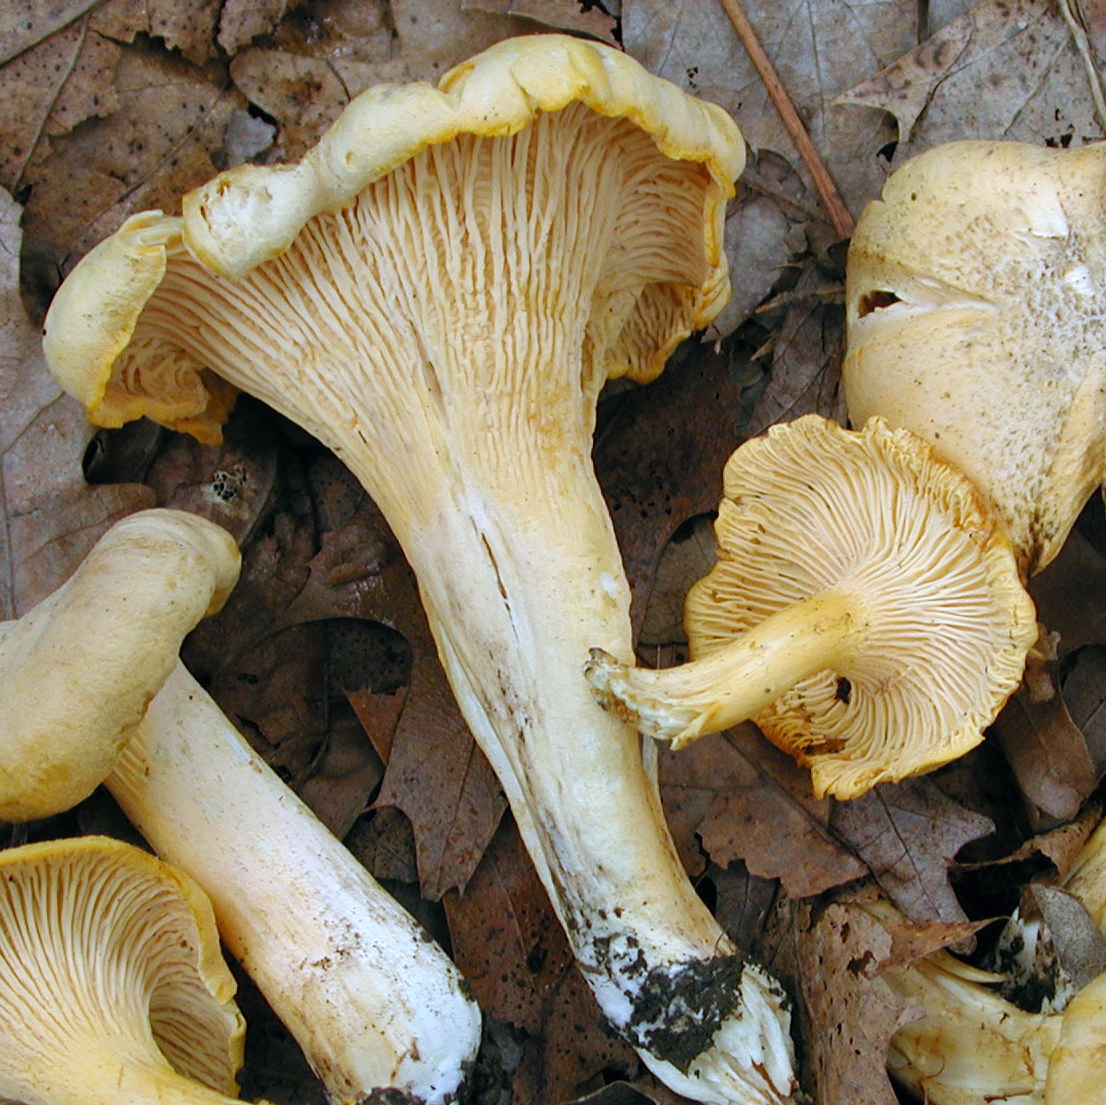 Mushroom Discovery